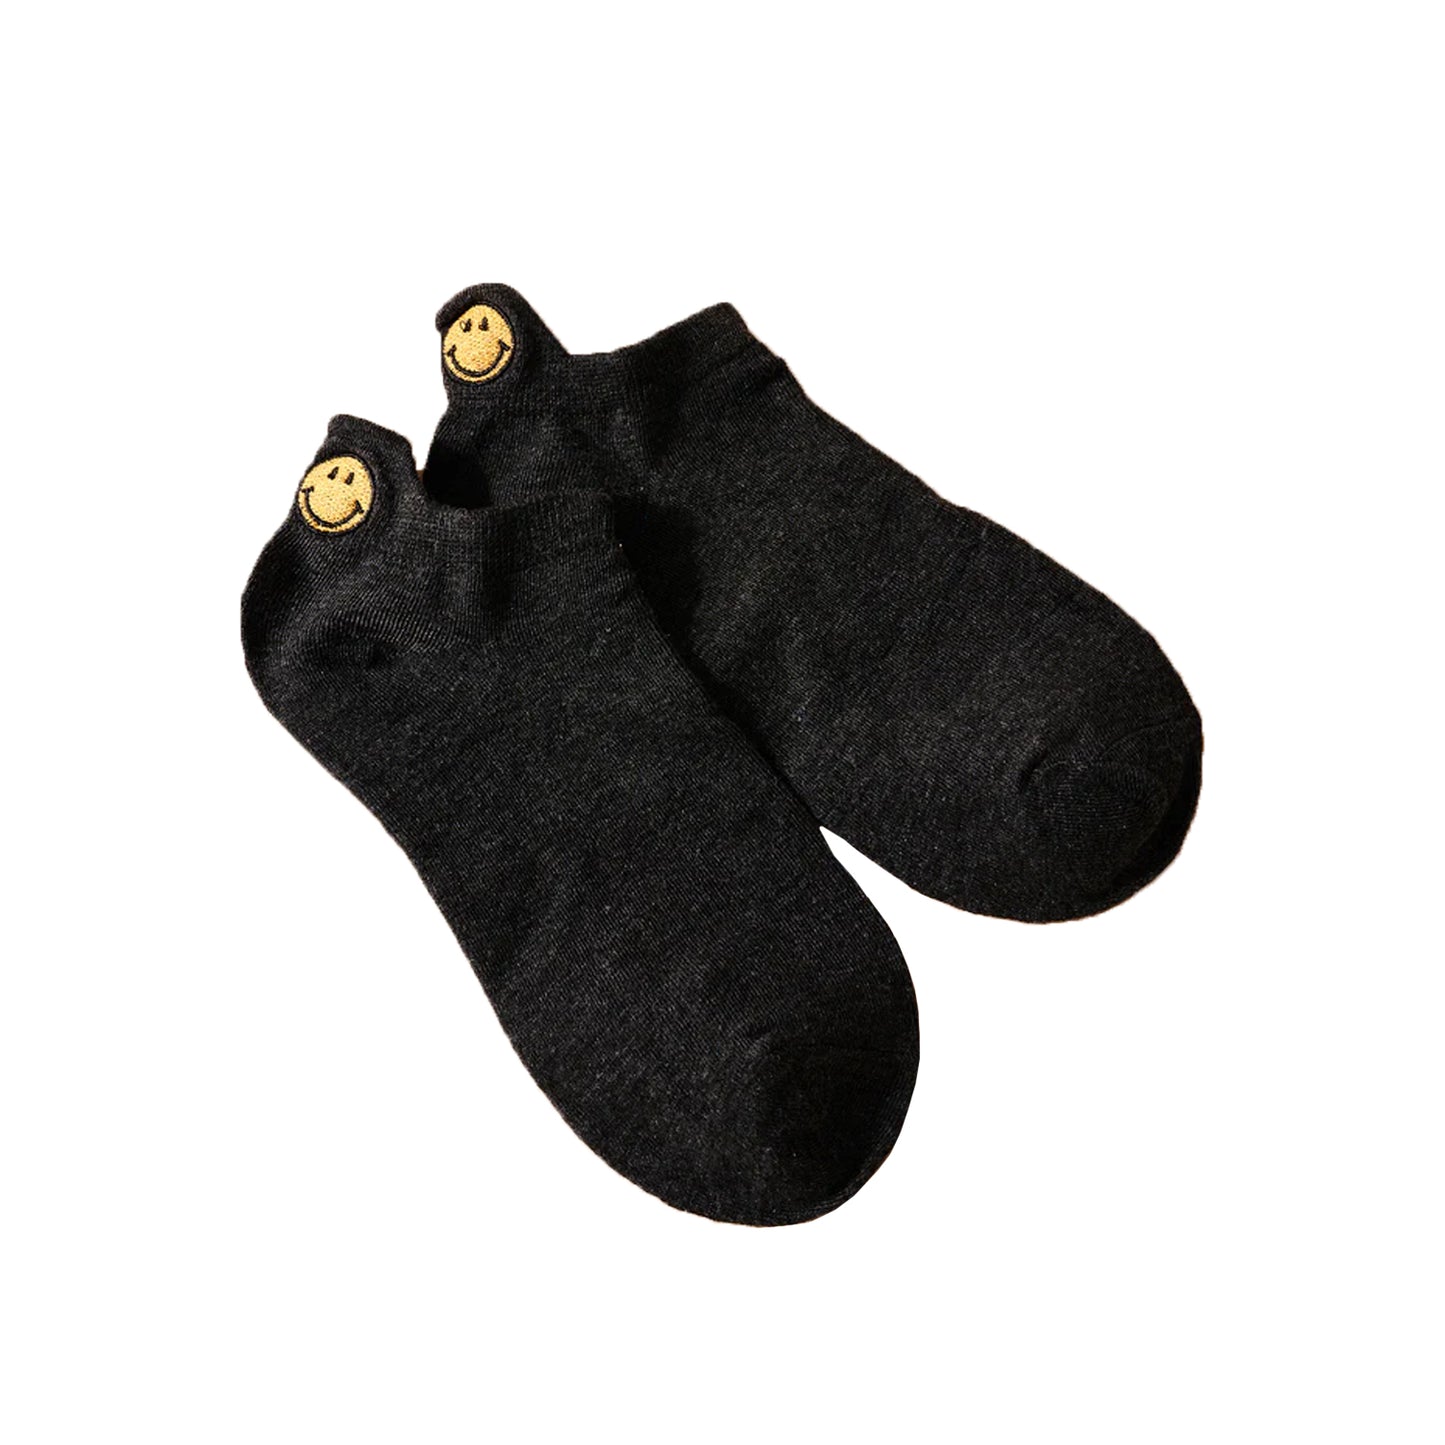 FLOOF Ankle Smile Emoji Socks in Black